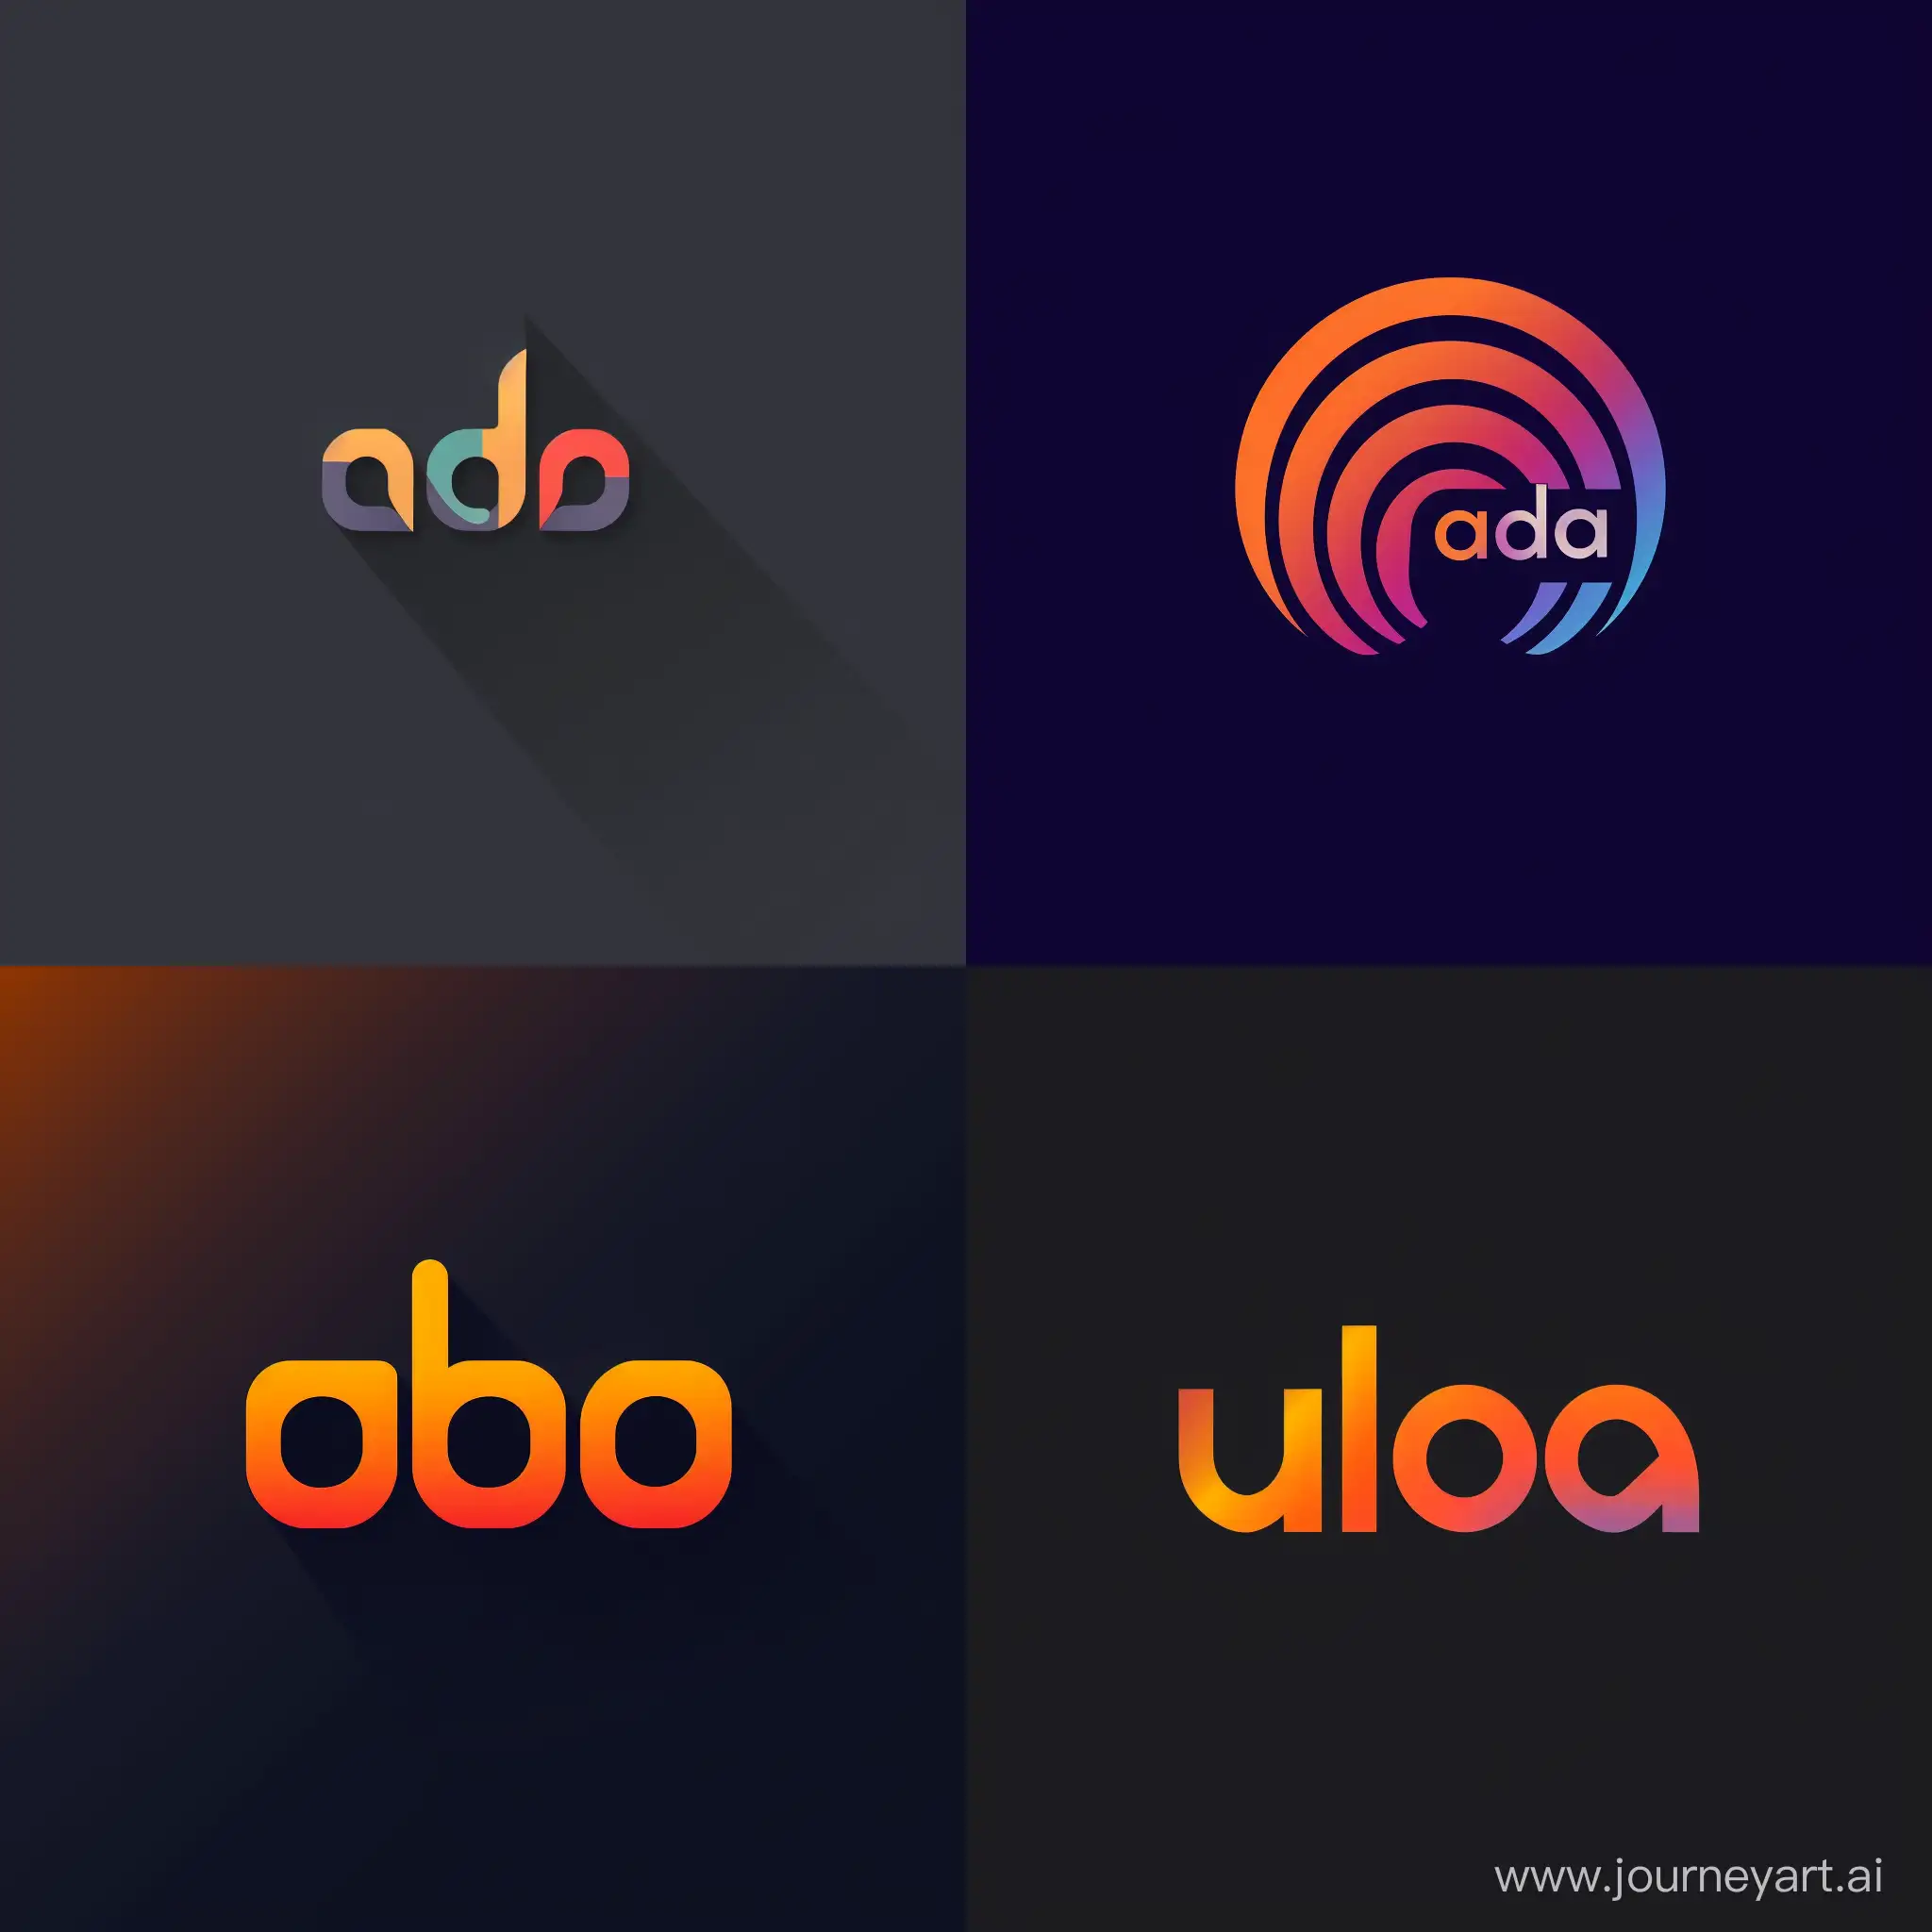 A modern, minimalist logo for a music platform called Auda